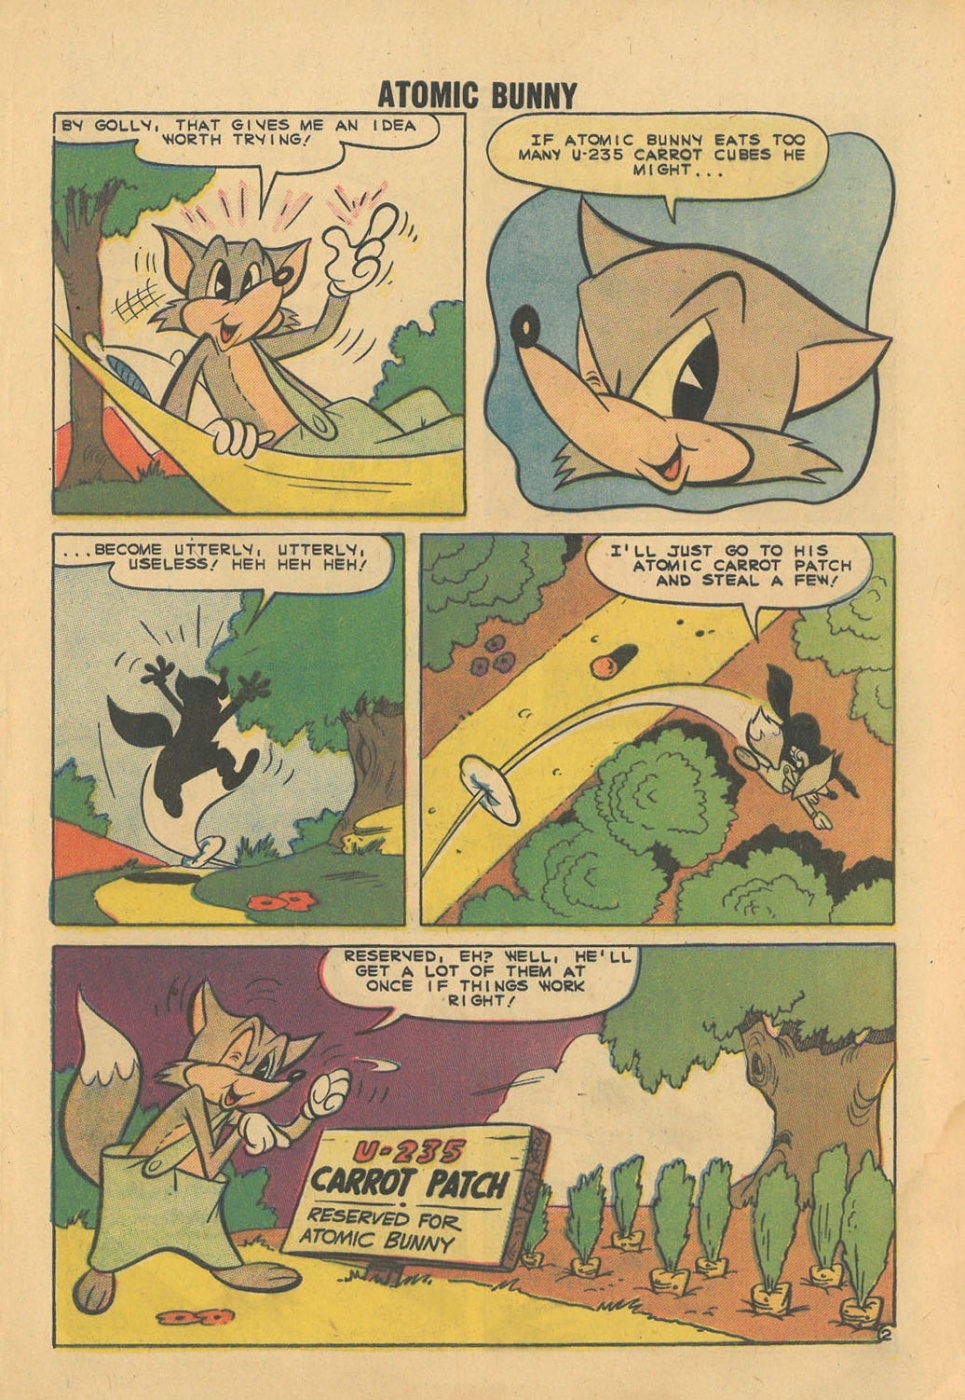 Atomic-Bunny-Comic-Strips (c) (28)